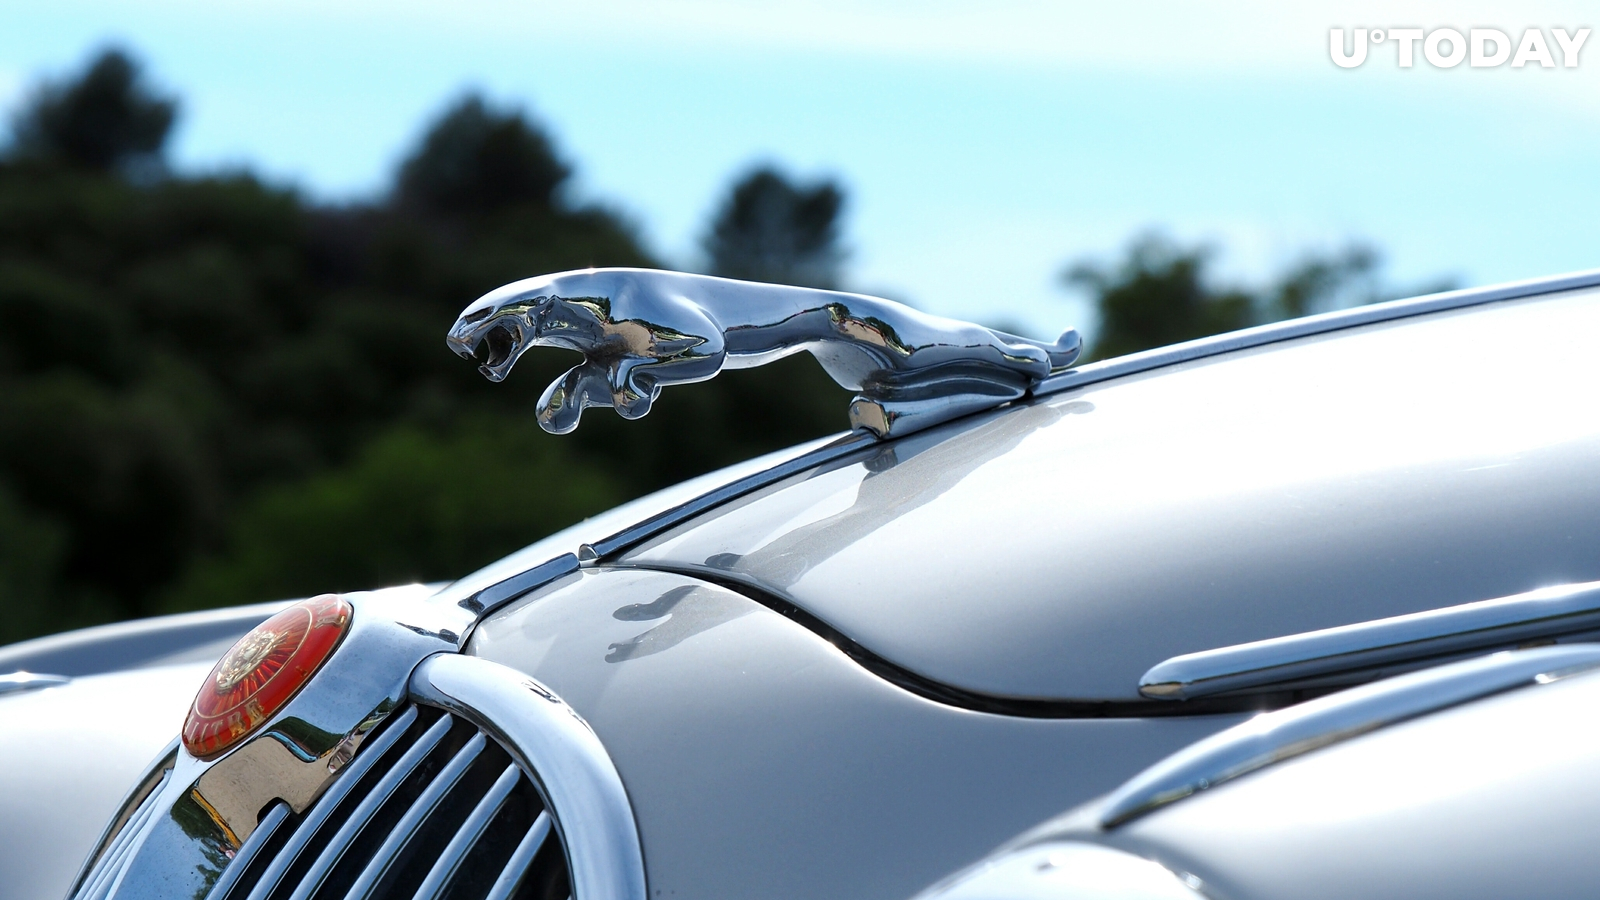 IOTA Skyrockets 16 Percent on Jaguar Partnership. Will the Rally Continue?